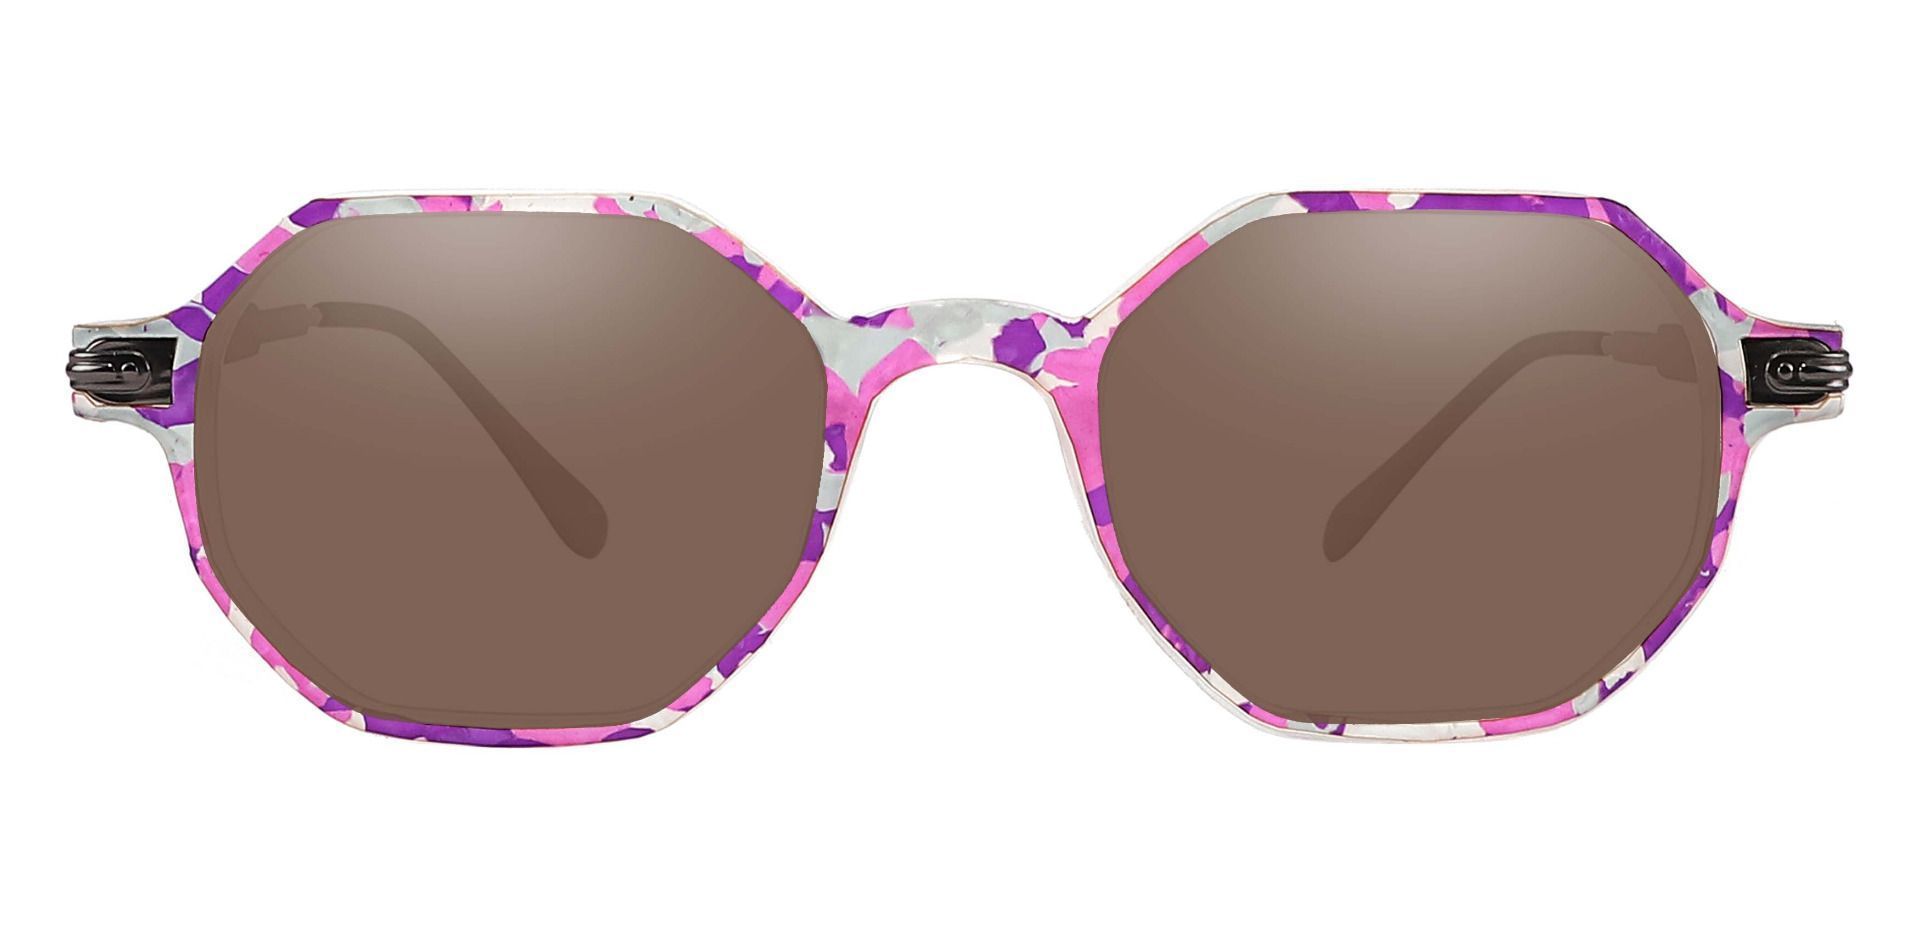 Bogart Geometric Non-Rx Sunglasses - Purple Frame With Brown Lenses